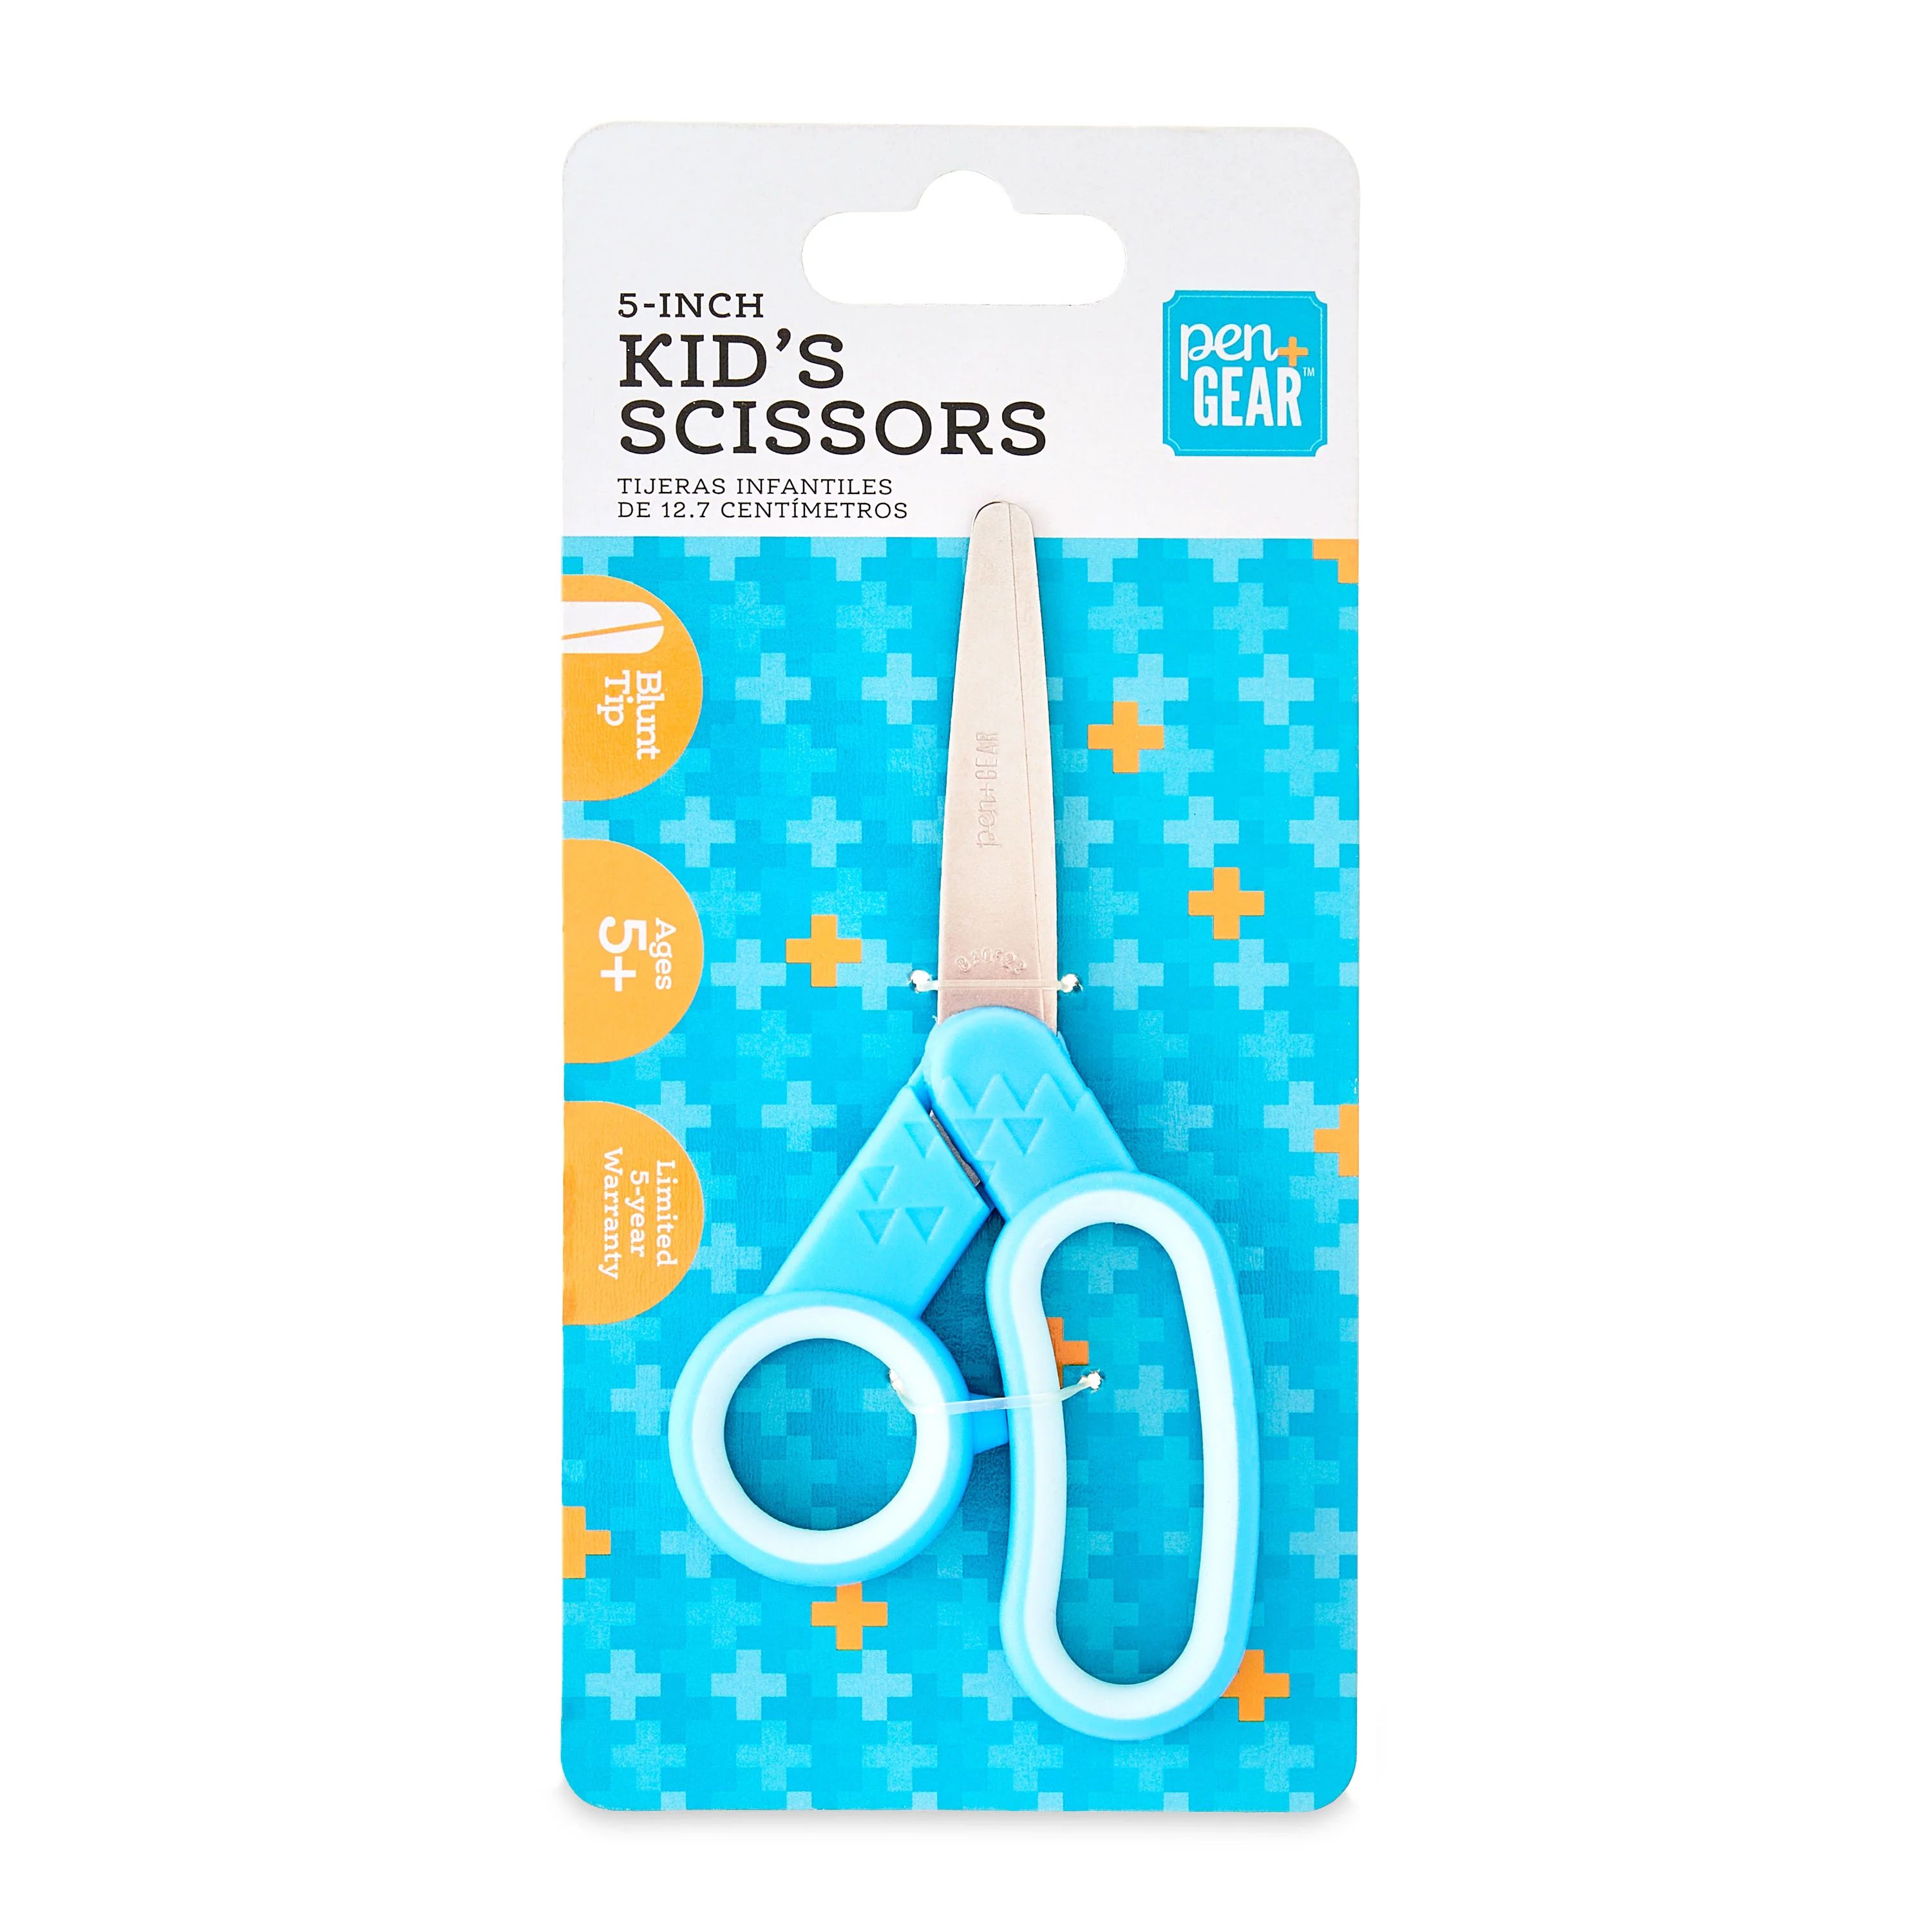 Pen + Gear Blunt Tip 5" Scissors for Kids 4+, School Supplies, Light Blue | Walmart (US)